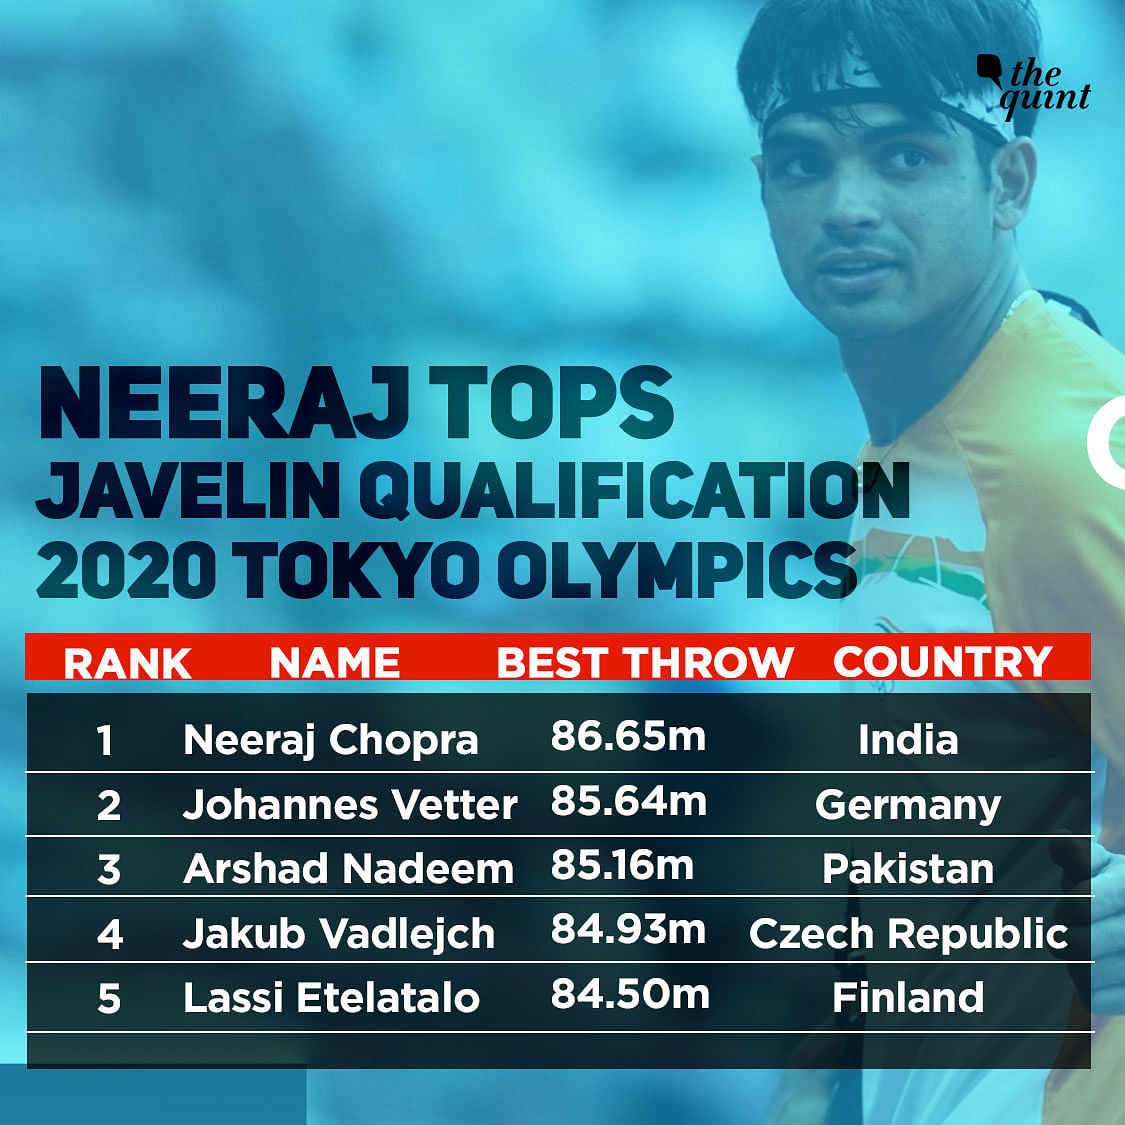 Watch video highlights of Neeraj Chopra's javelin throw event at the 2020 Tokyo Olympics.